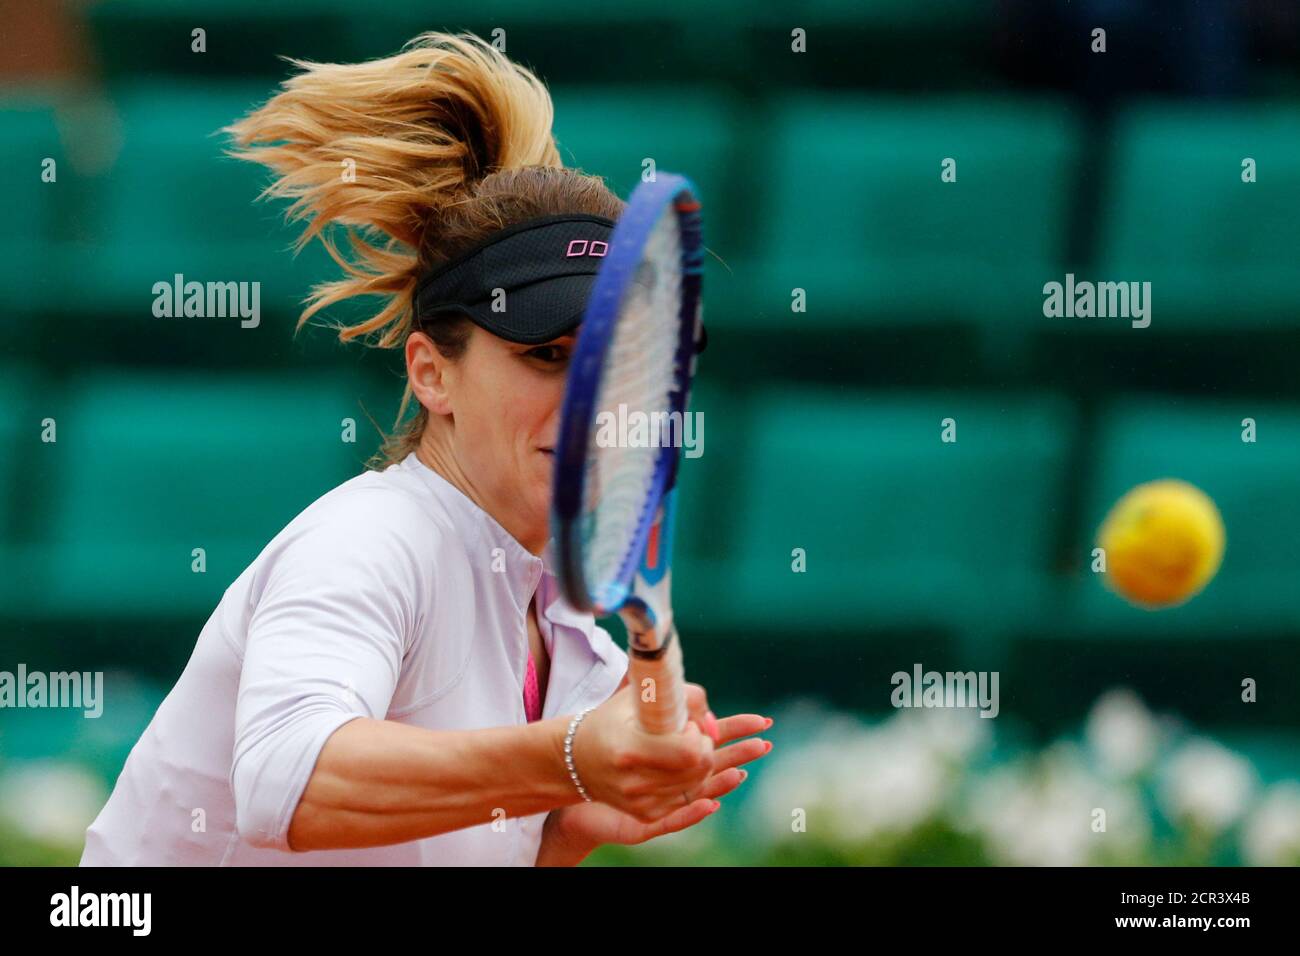 Tennis - French Open - Roland Garros - Tsvetana Pironkova of Bulgaria v  Agnieszka Radwanska of Poland - Paris, France - 31/05/16. Tsvetana Pironkova  returns the ball. REUTERS/Pascal Rossignol Stock Photo - Alamy